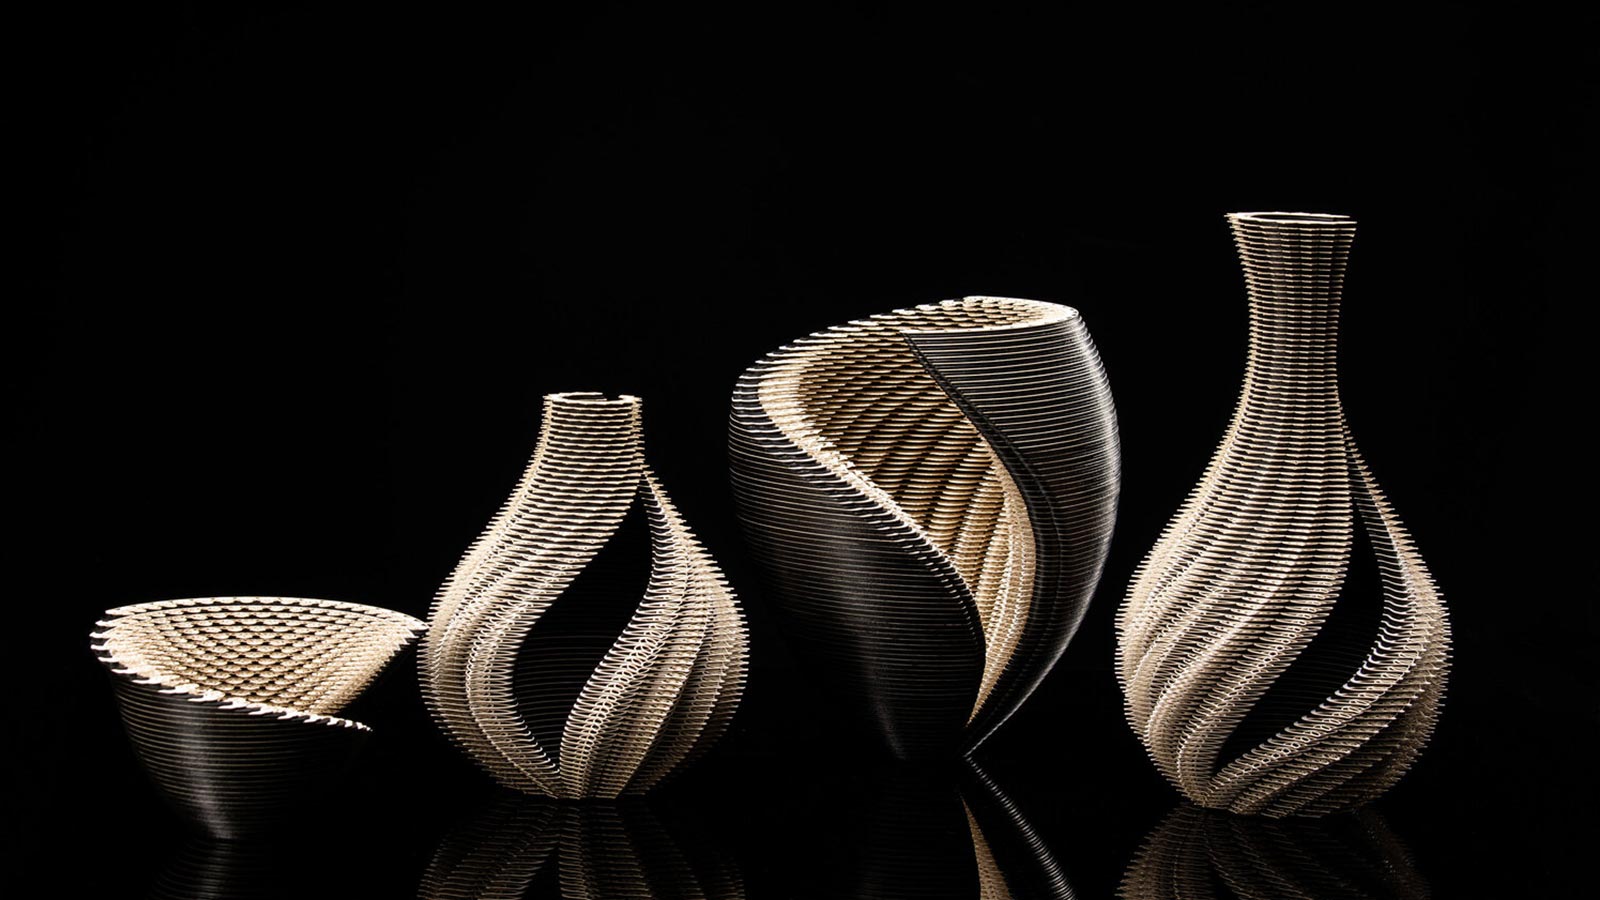 Symbio Vessels: Stunning laser-cut paper sculptures by Ibbini Studio